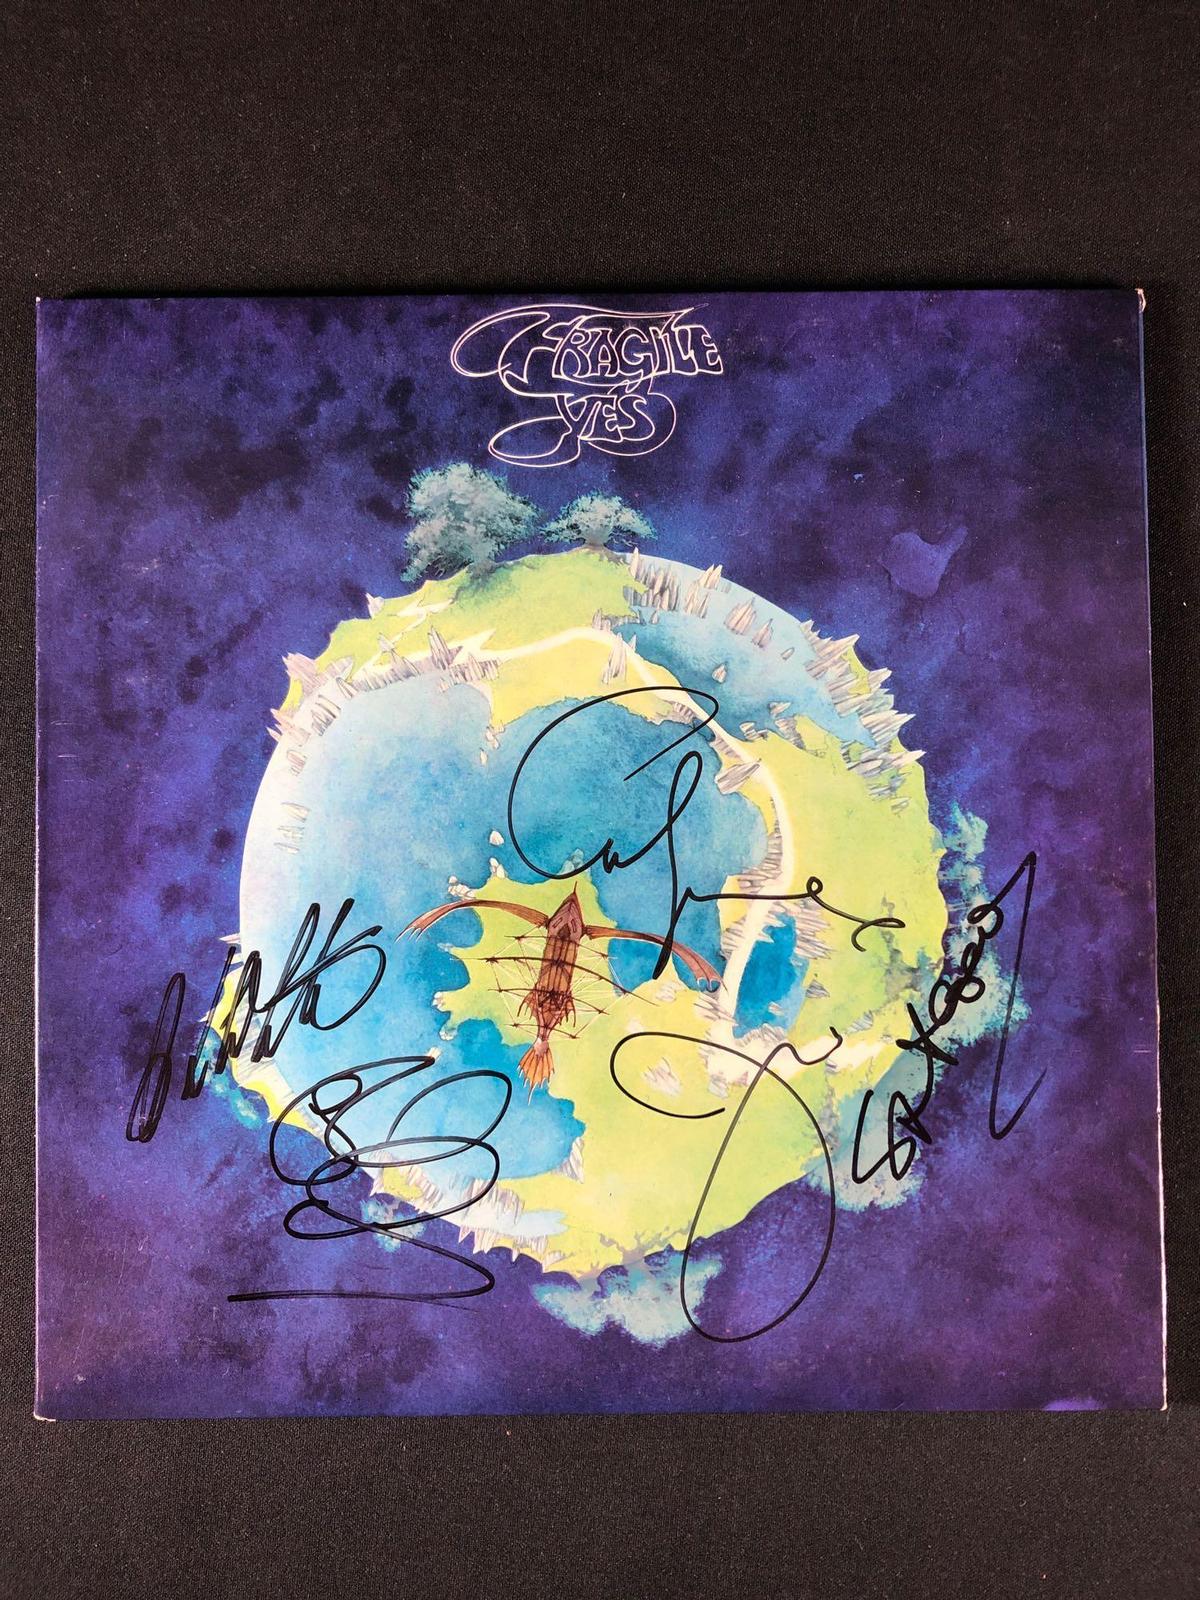 Yes "Fragile" Autographed Album